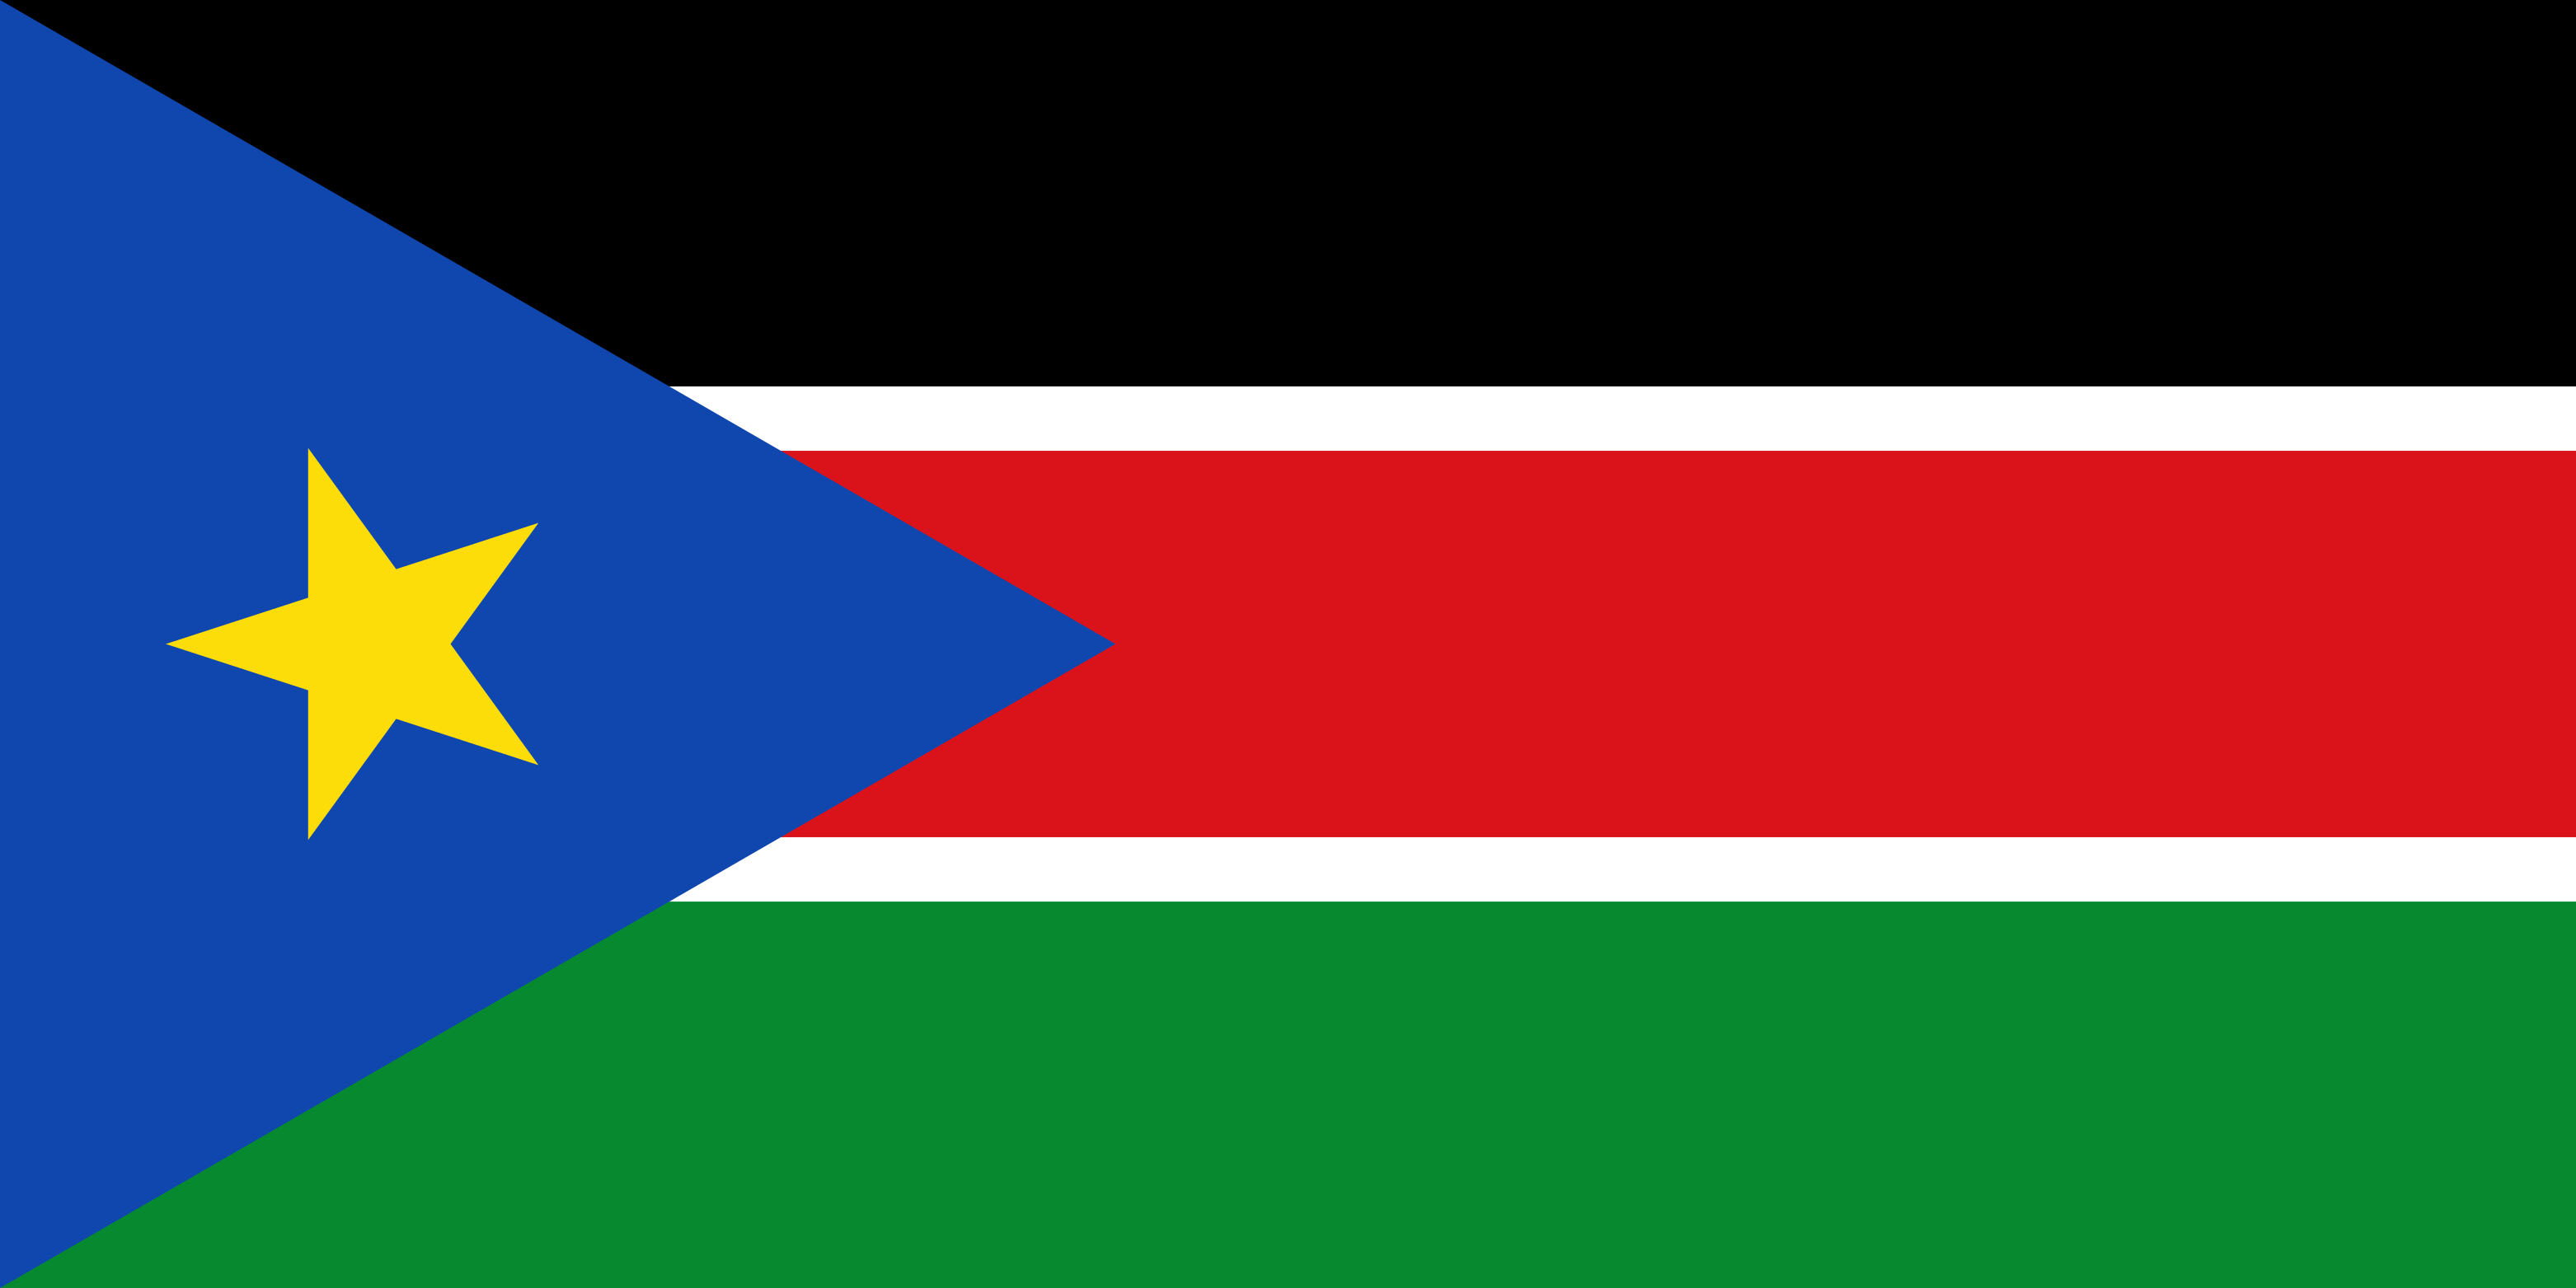 South Sudan Flag Image - Free Download